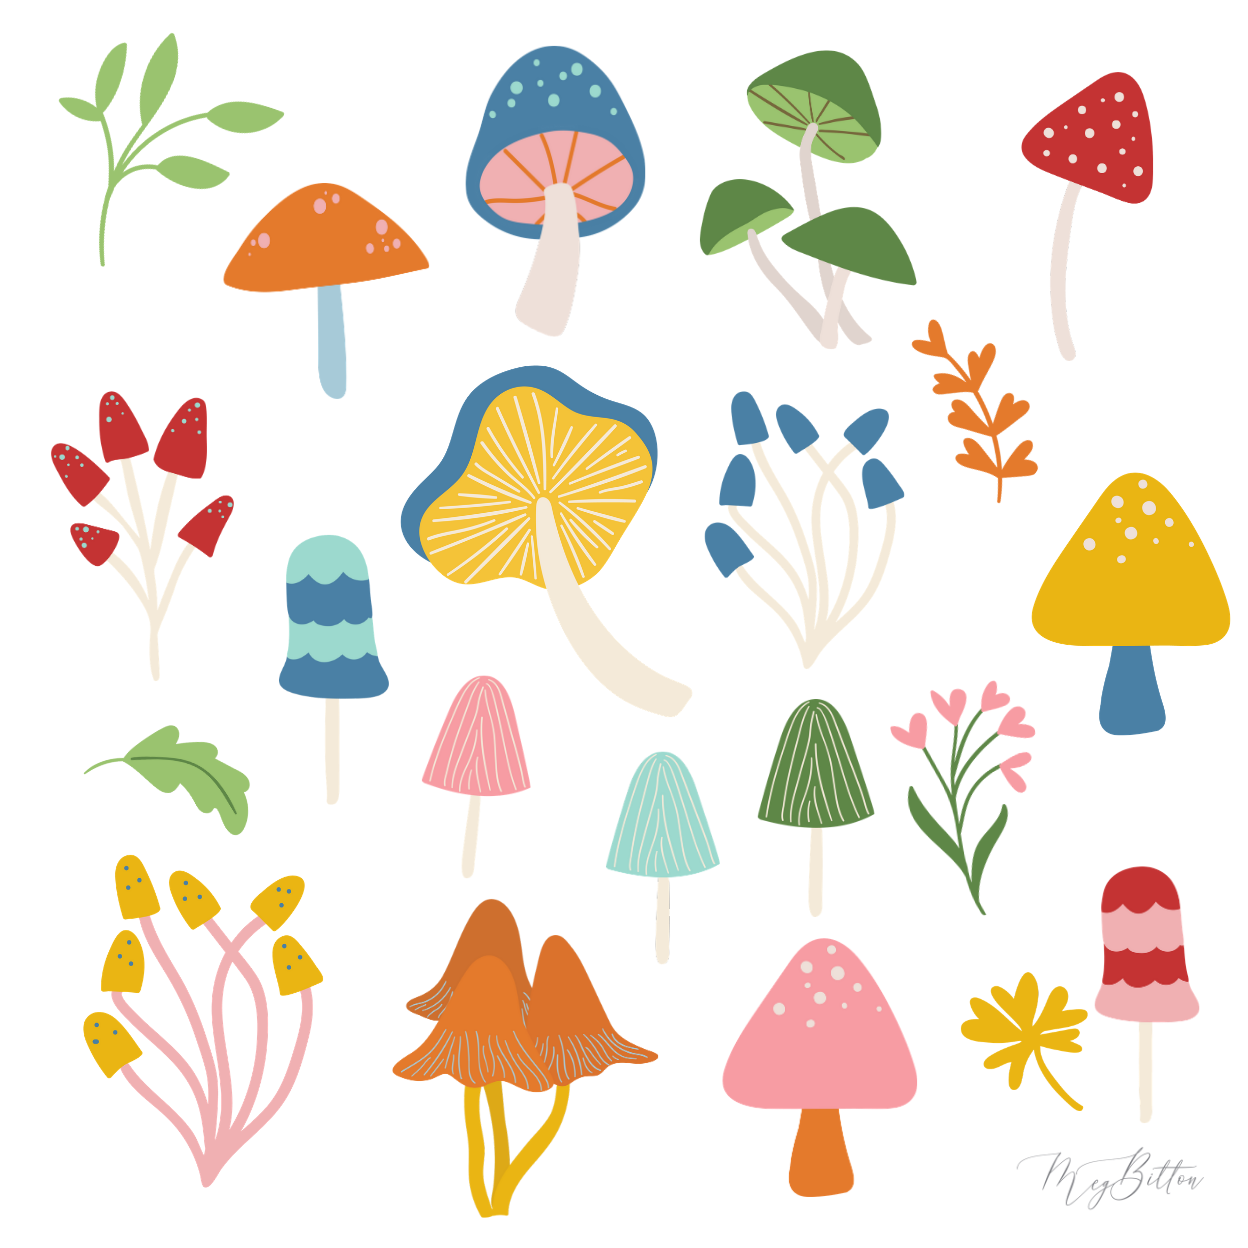 Mushrooms - Meg Bitton Productions